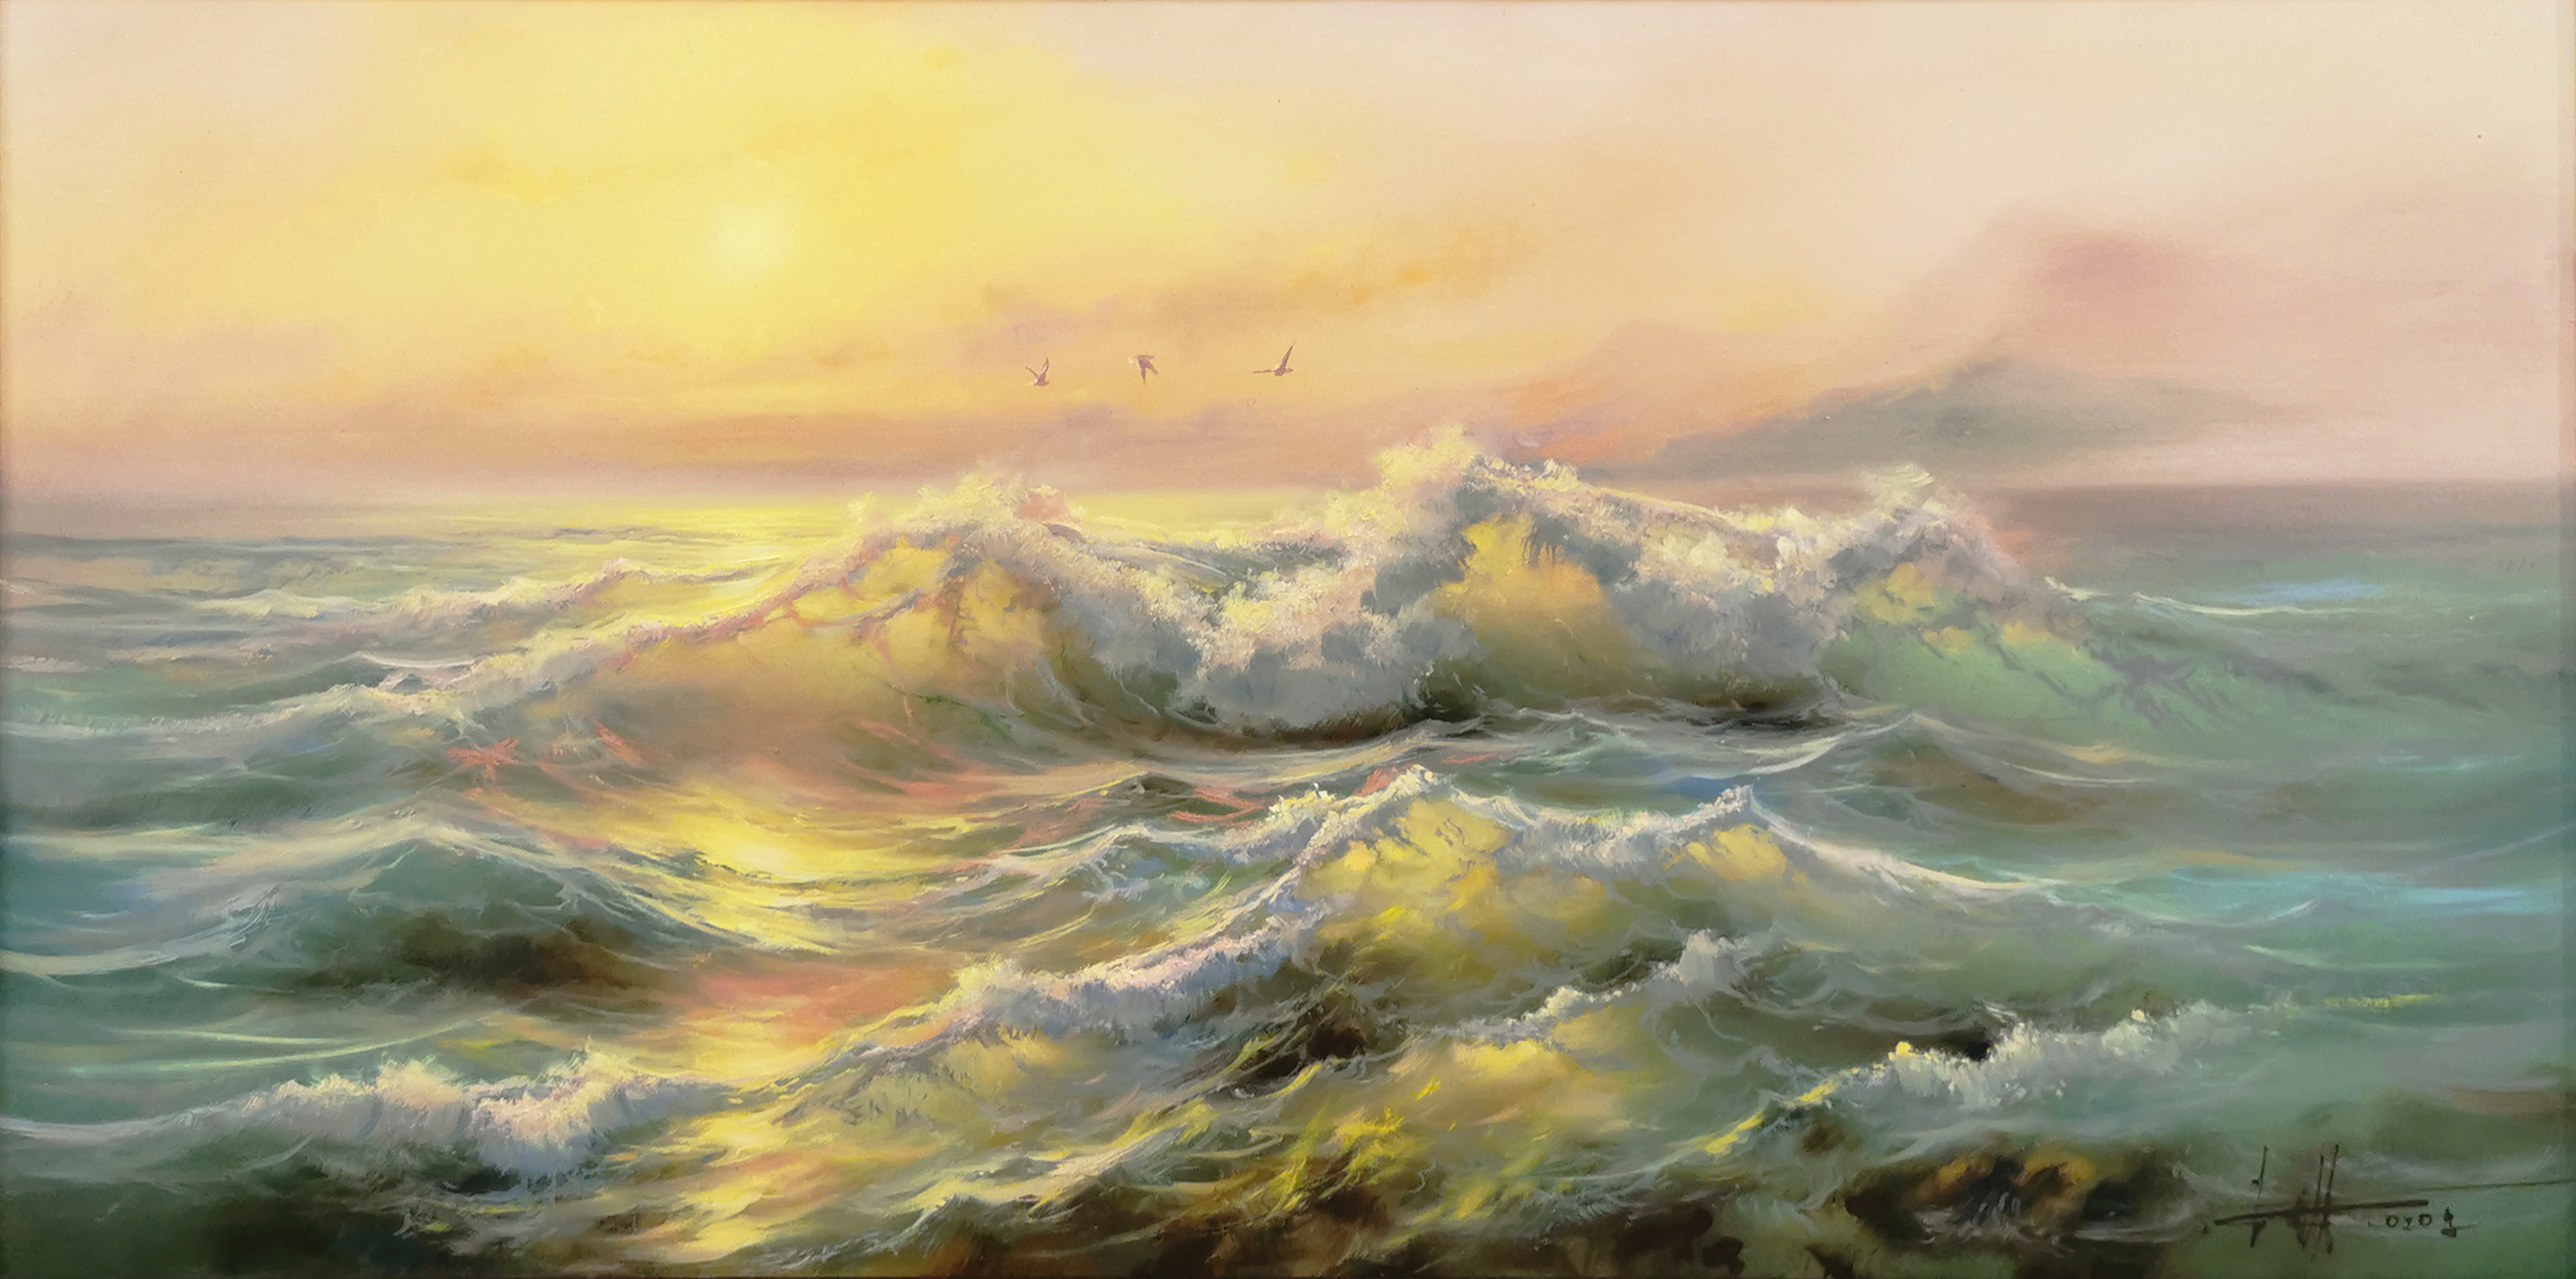 Sea - 1, Dmitry Balakhonov, Buy the painting Oil